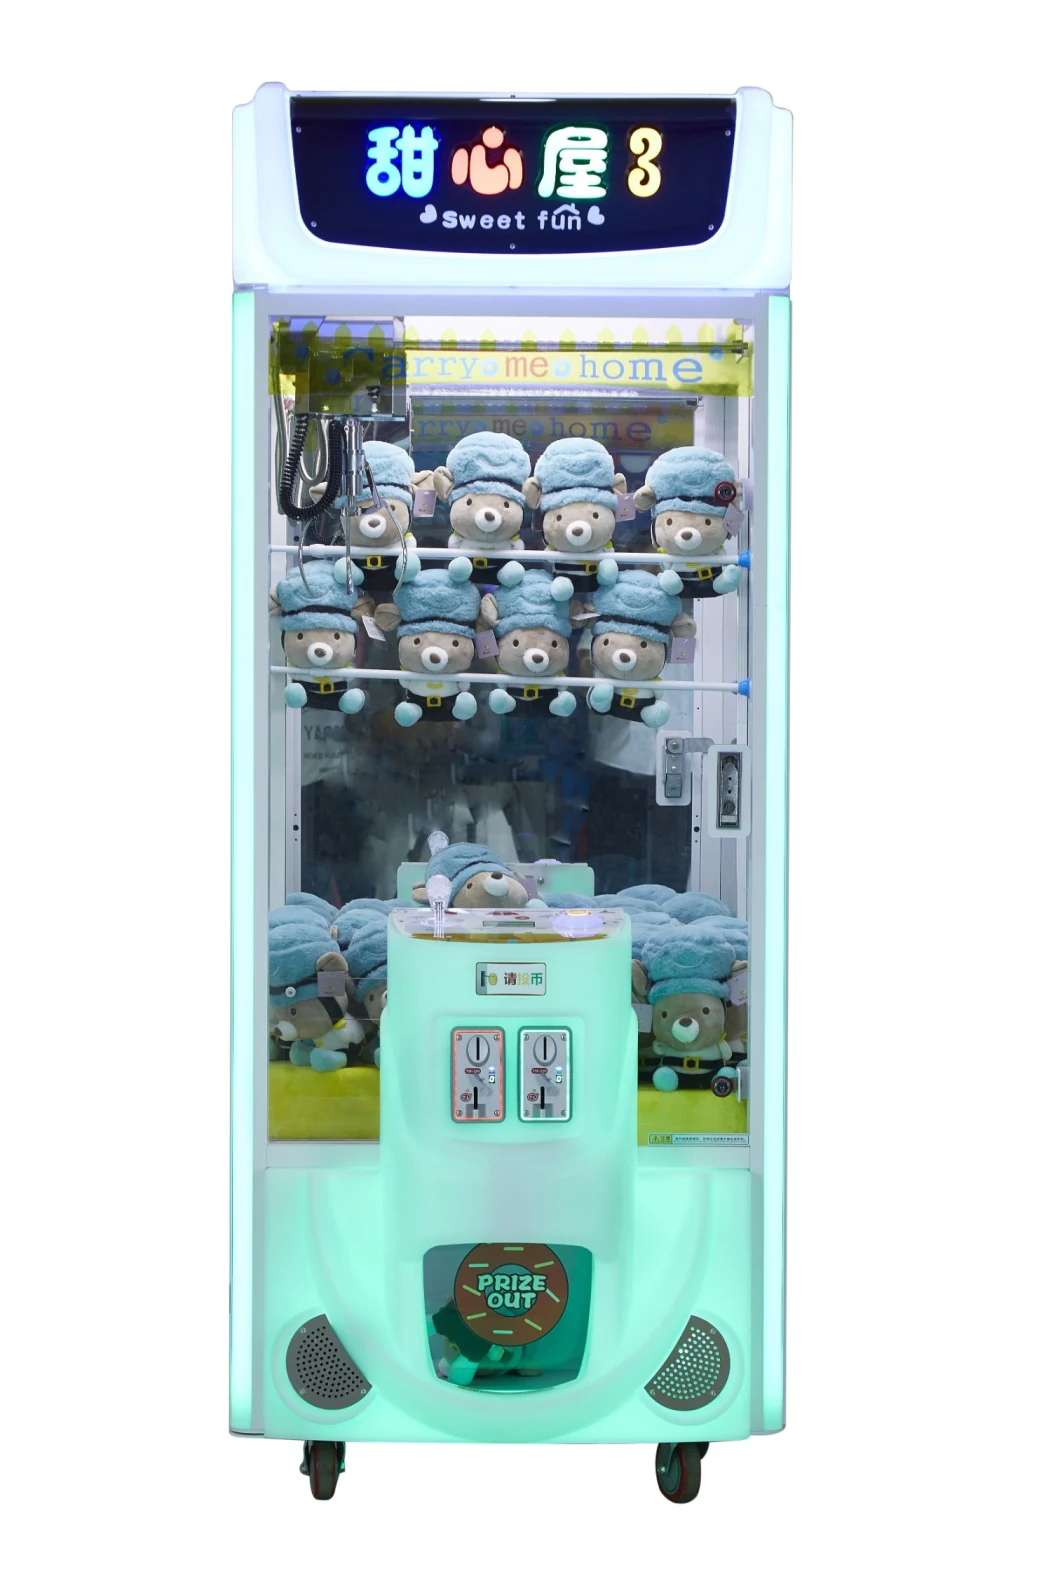 Game Machine/Prize/Toy Vending/Price/Vending/Amusement/Arcade/Crane Claw/Toy Crane/Arcade Claw/Claw Crane /Claw/Crane/Game Machine